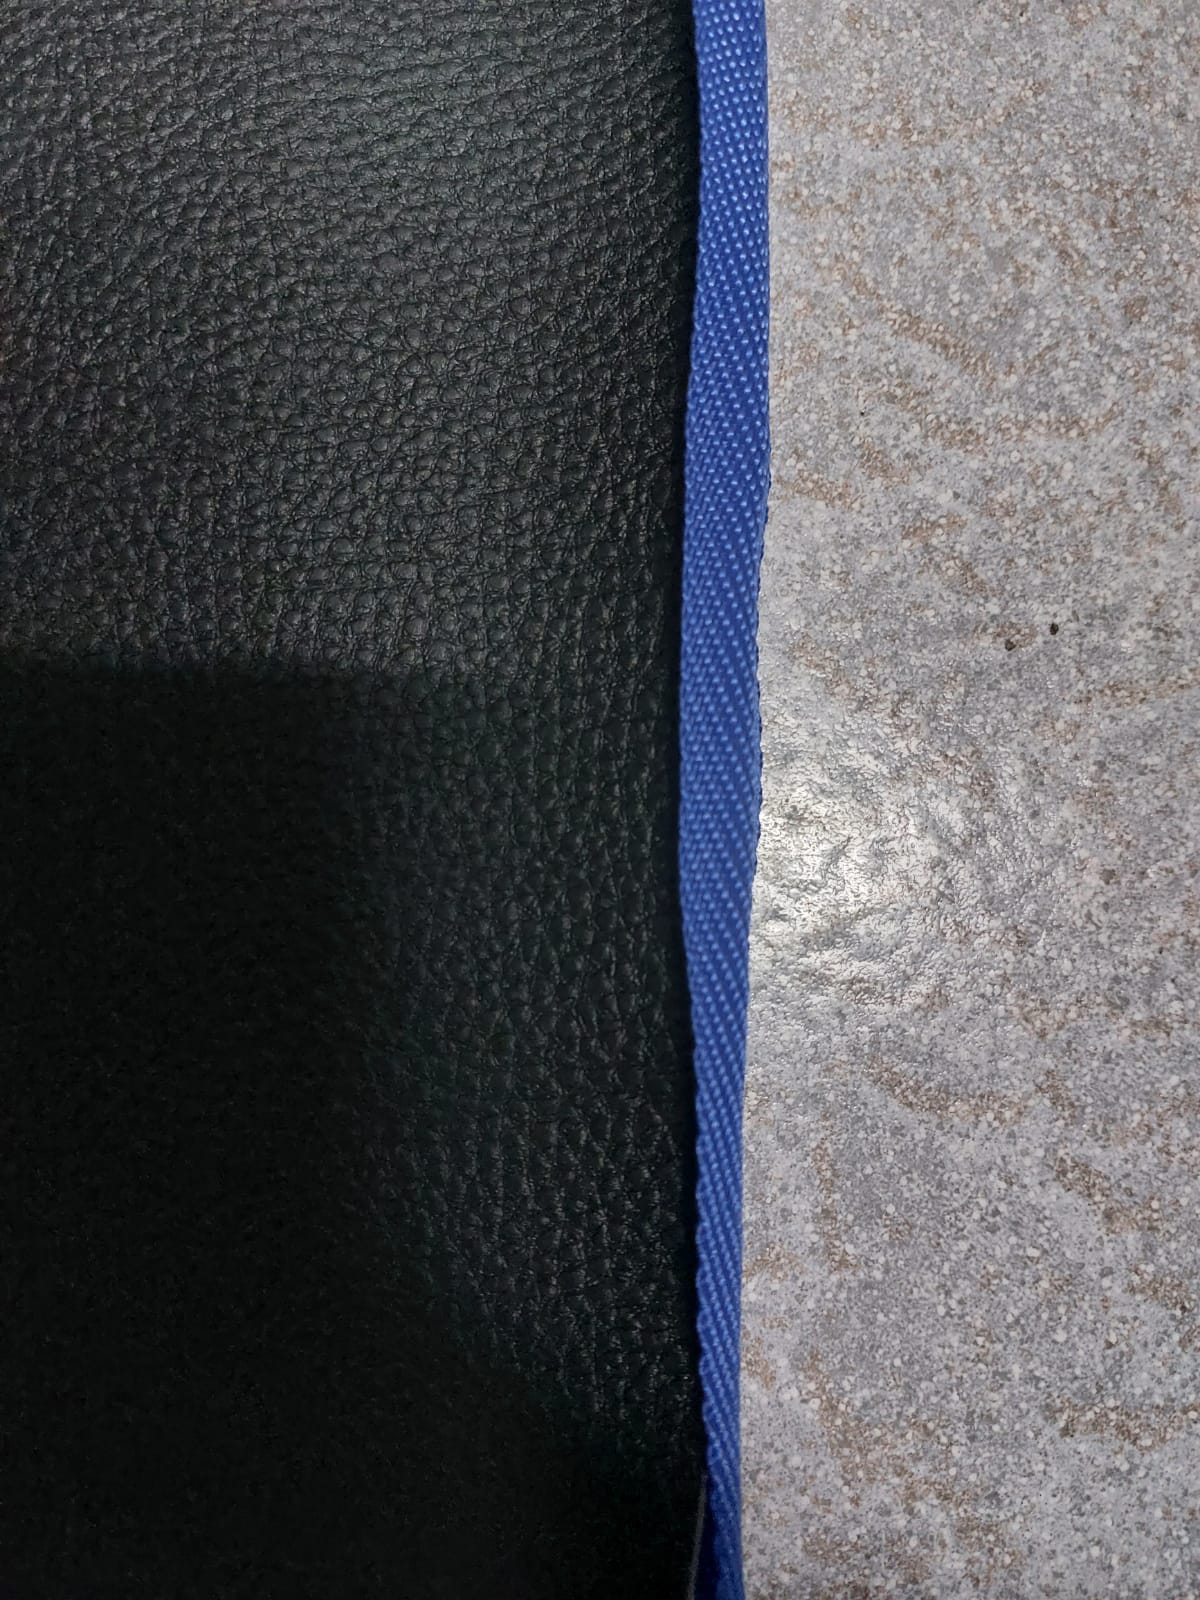 Peugeot Universal PVC Leather Floor Mats Set of 5